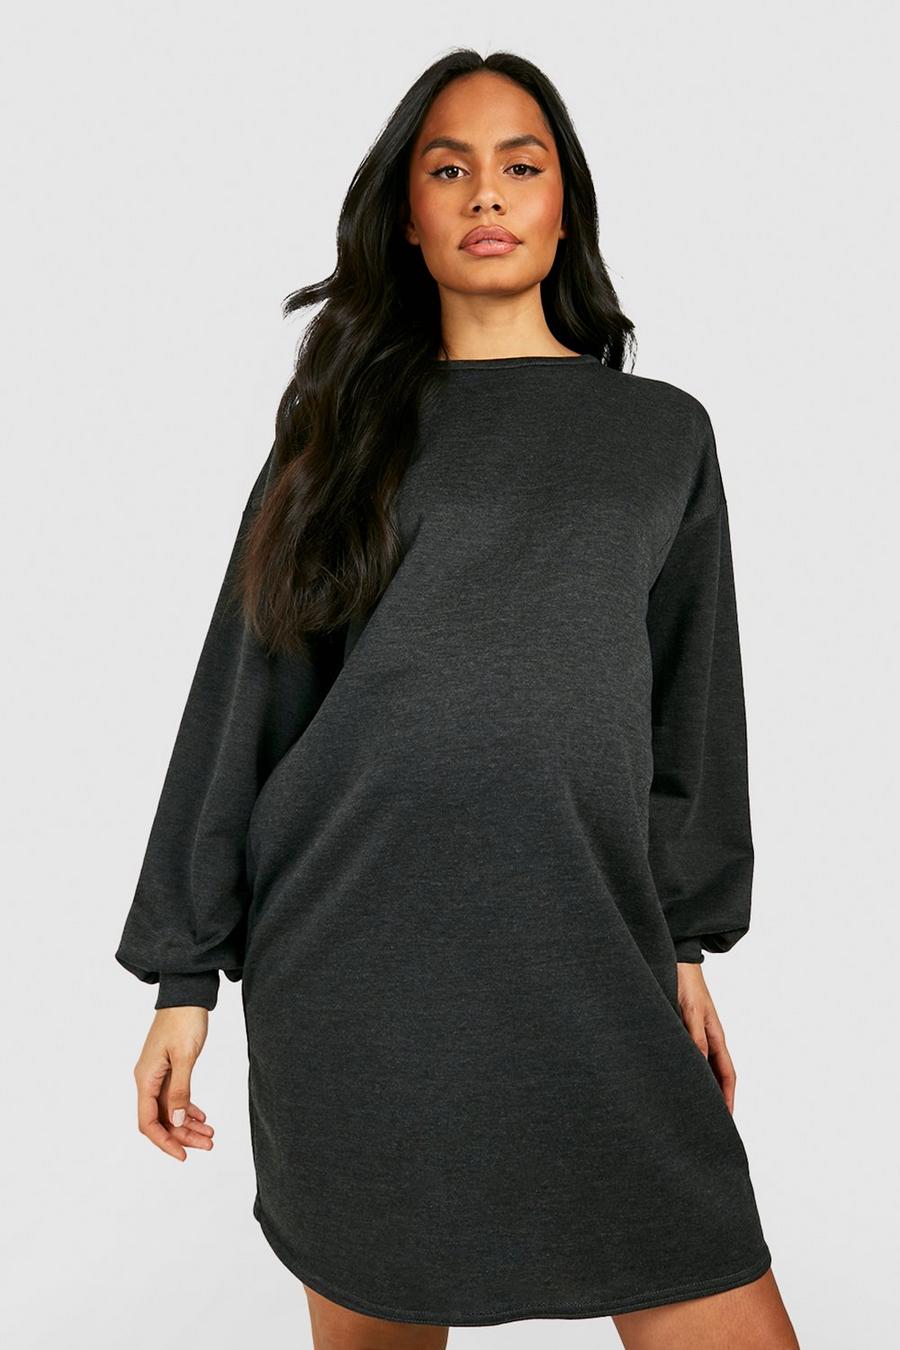 Charcoal grey Maternity Oversized Sweater Dress